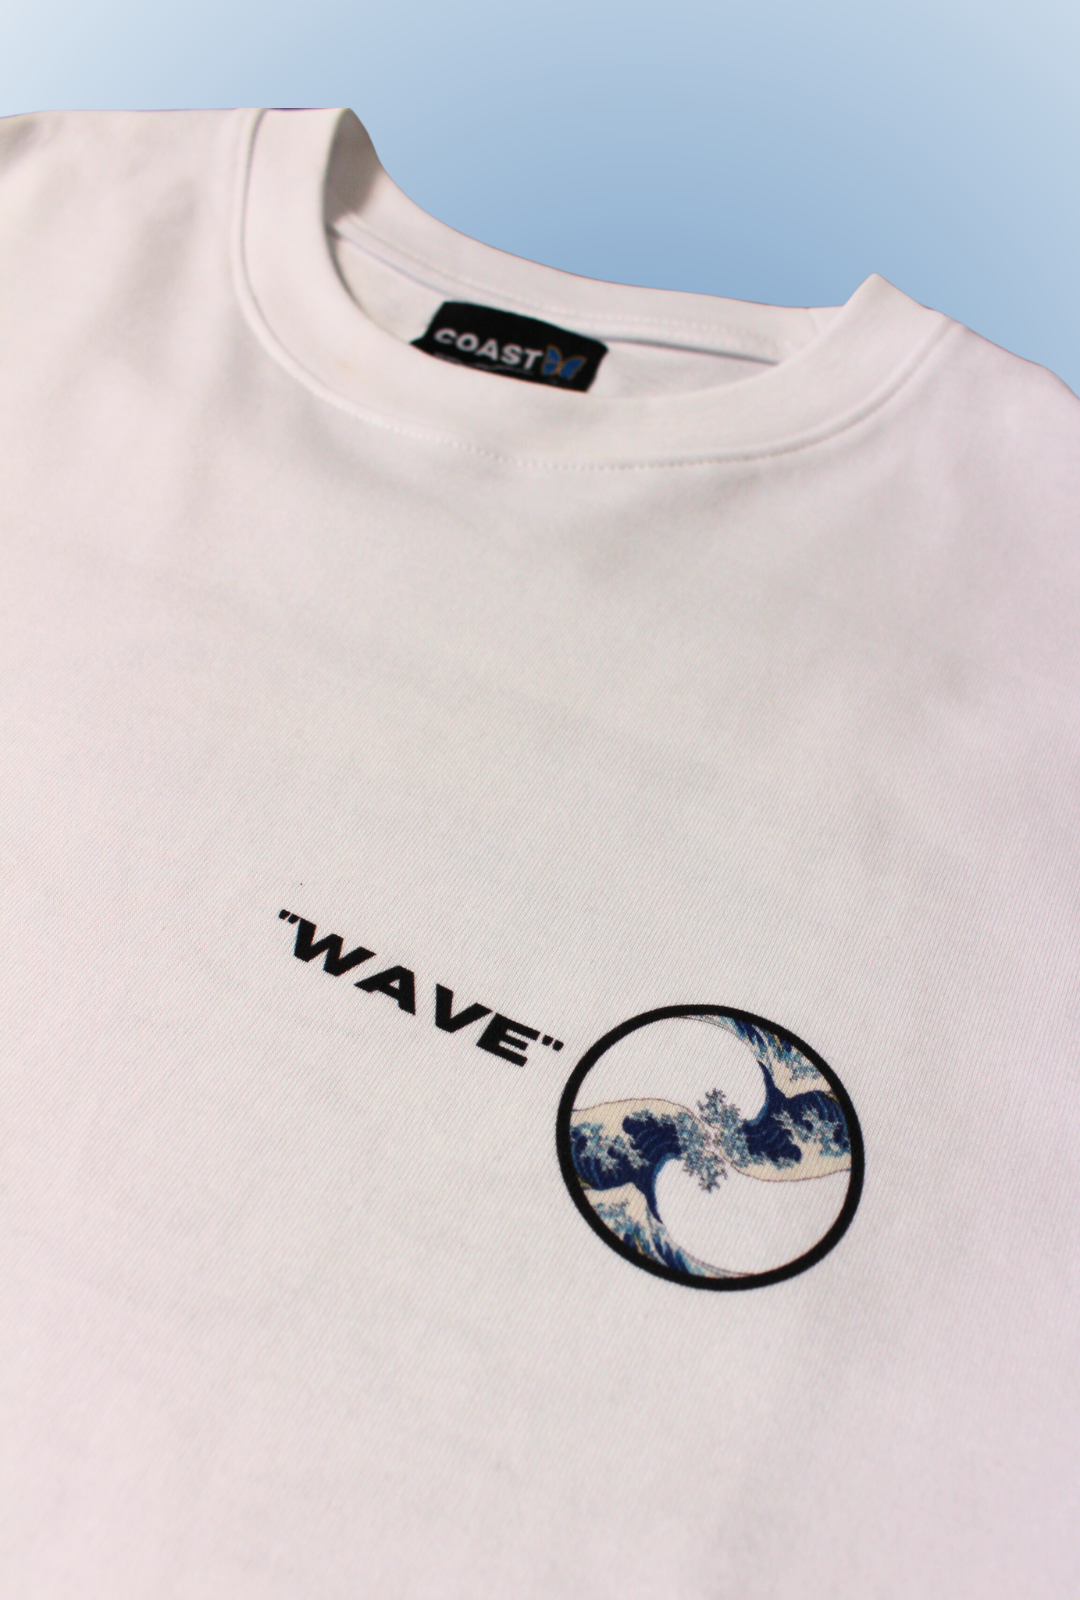 Wave Premium T-Shirt CoastBcn